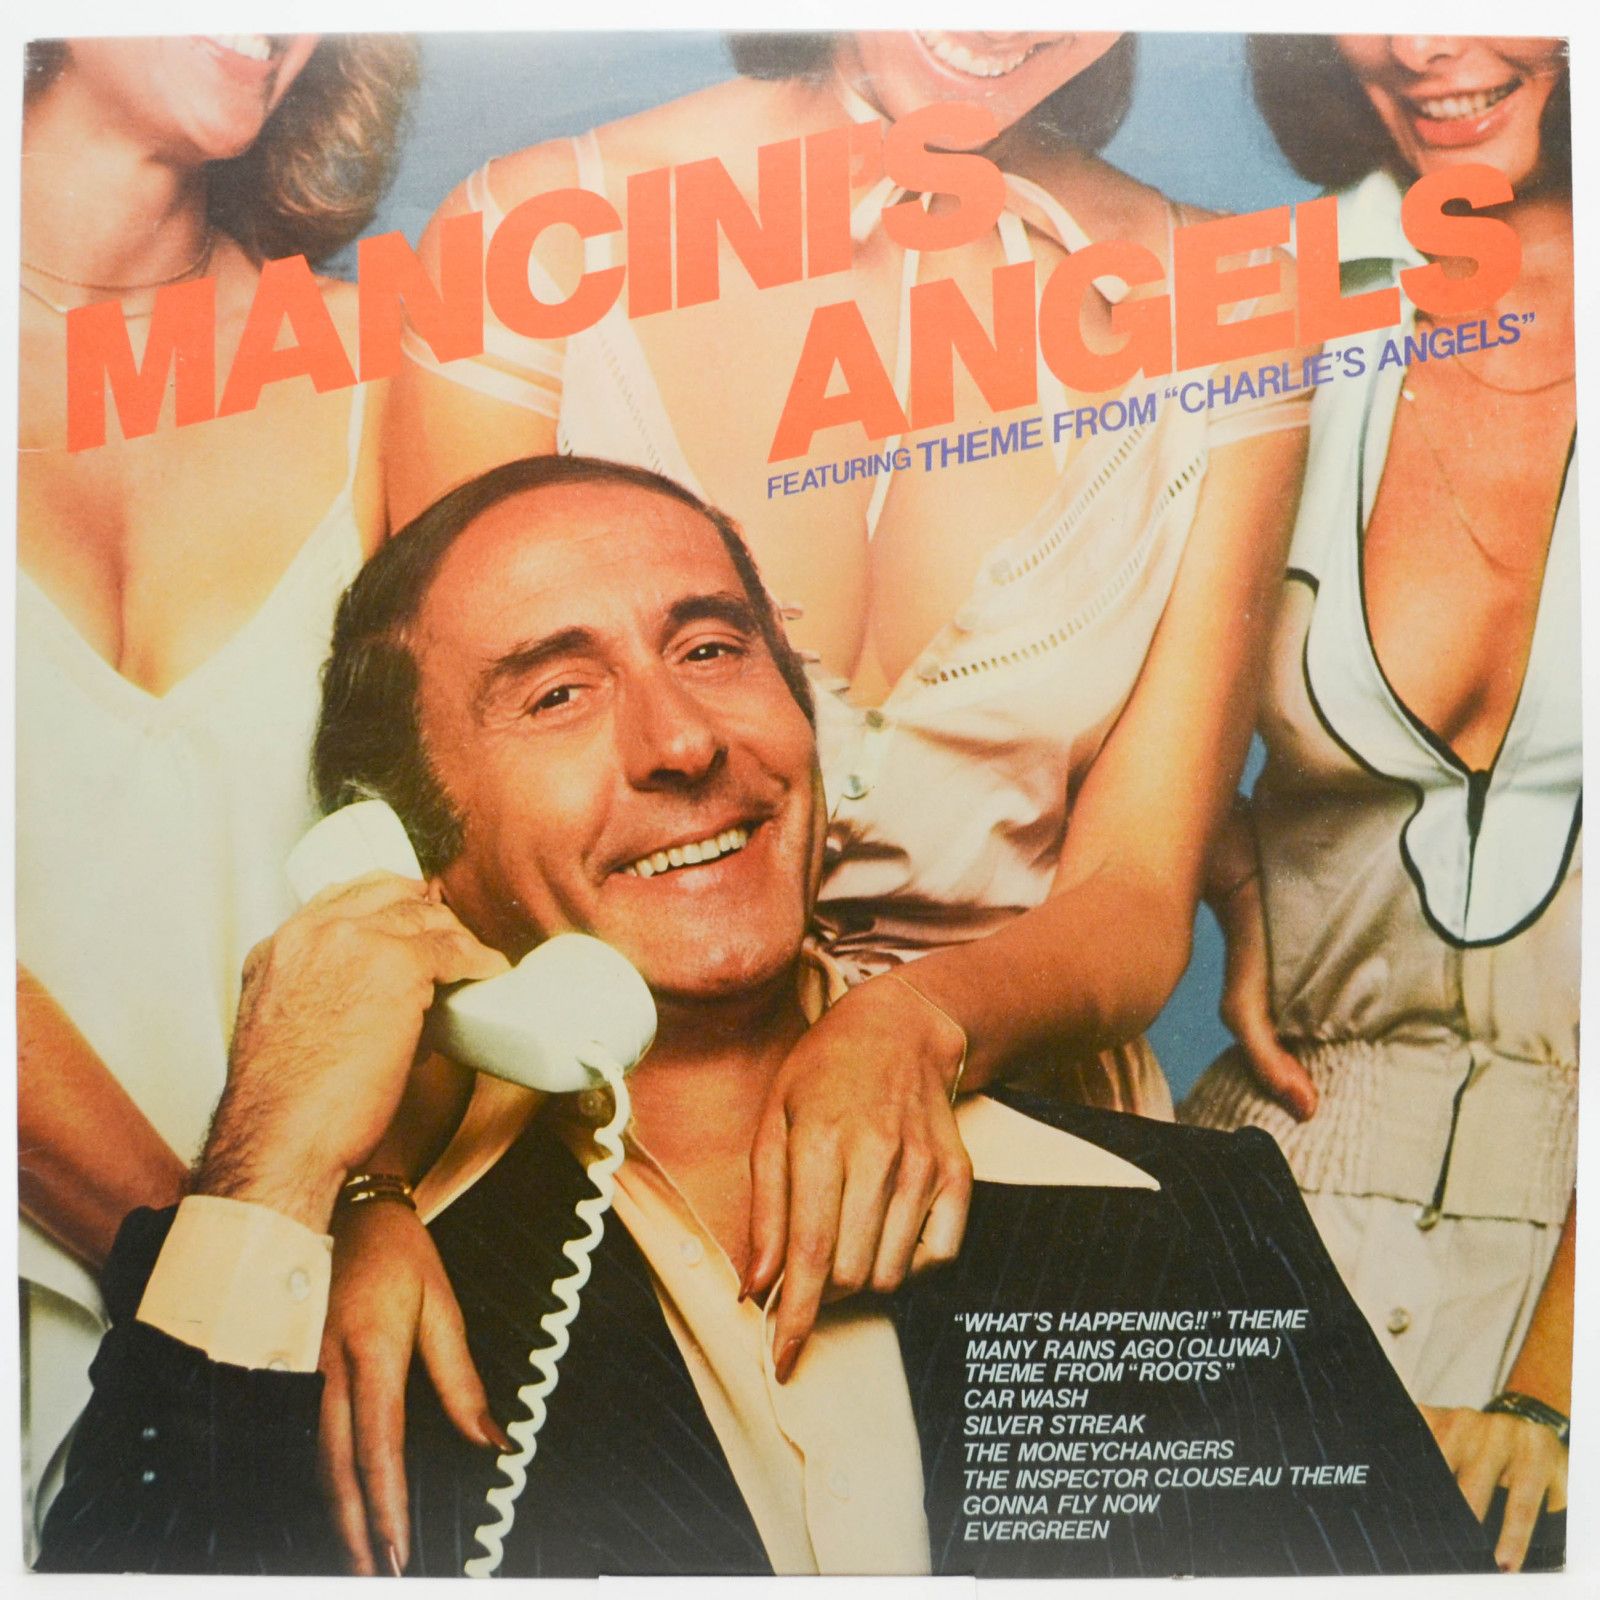 Henry Mancini — Mancini's Angels (UK), 1977